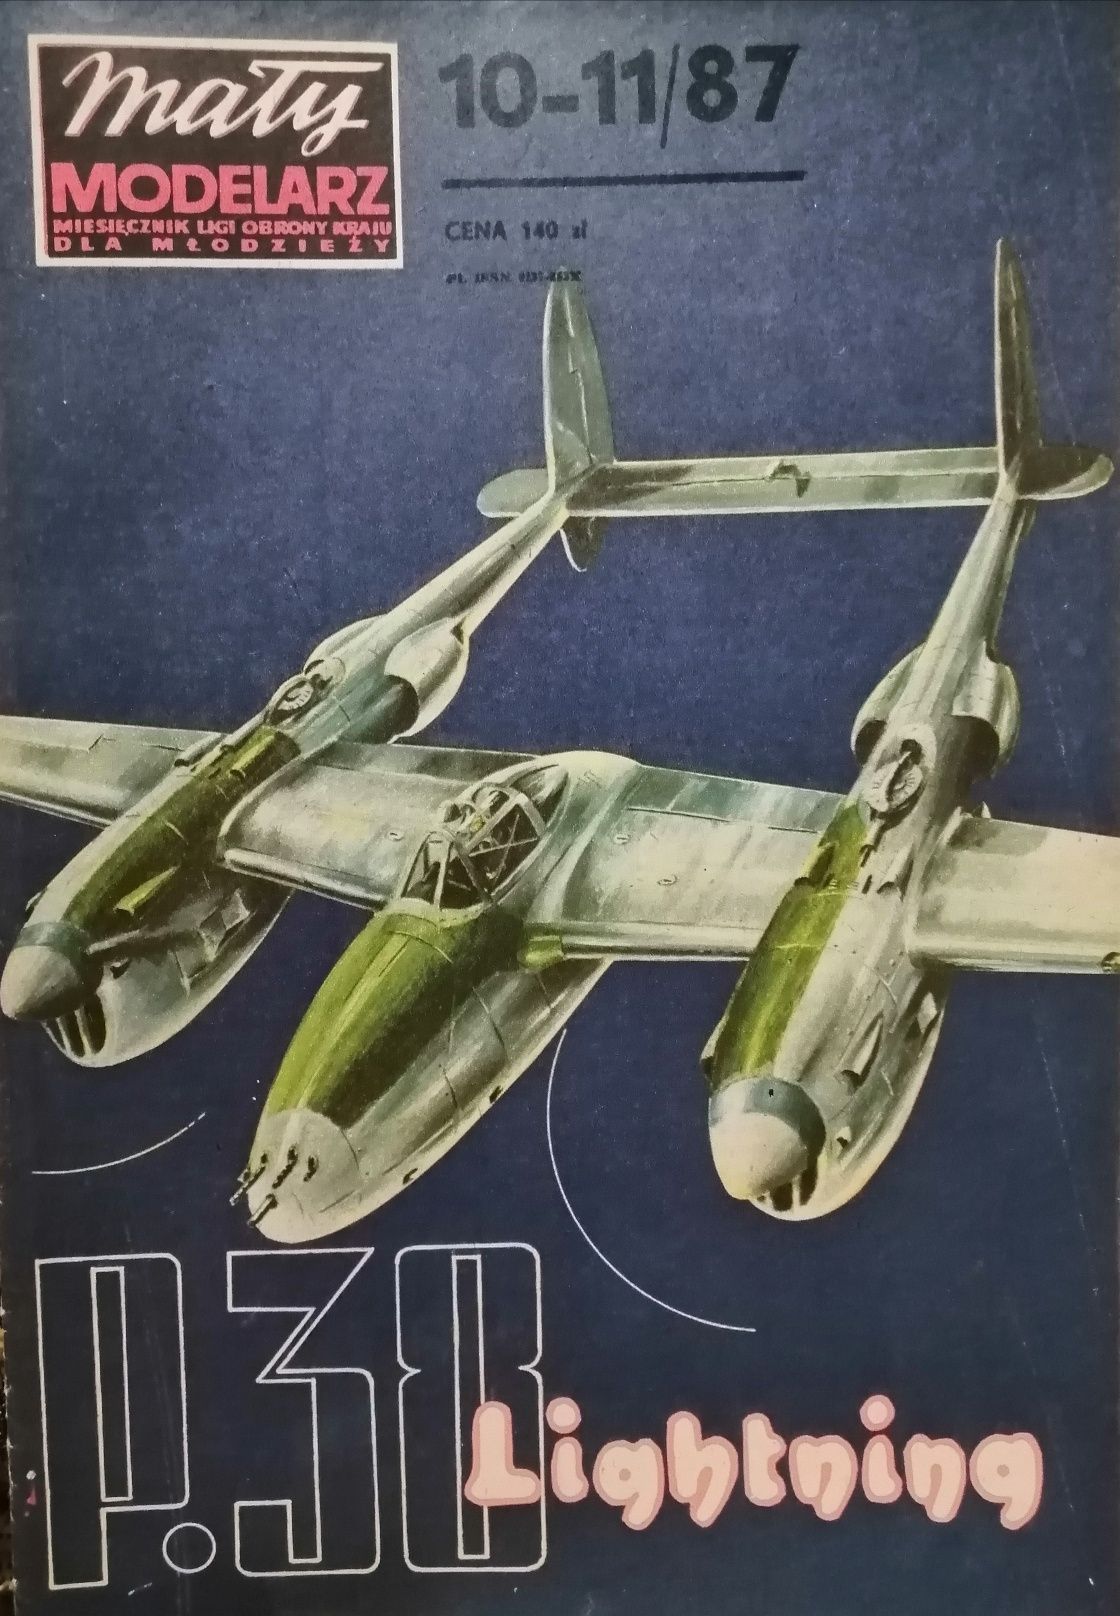 Model kartonowy P-38 Lightning 10-11/87 Mały Modelarz